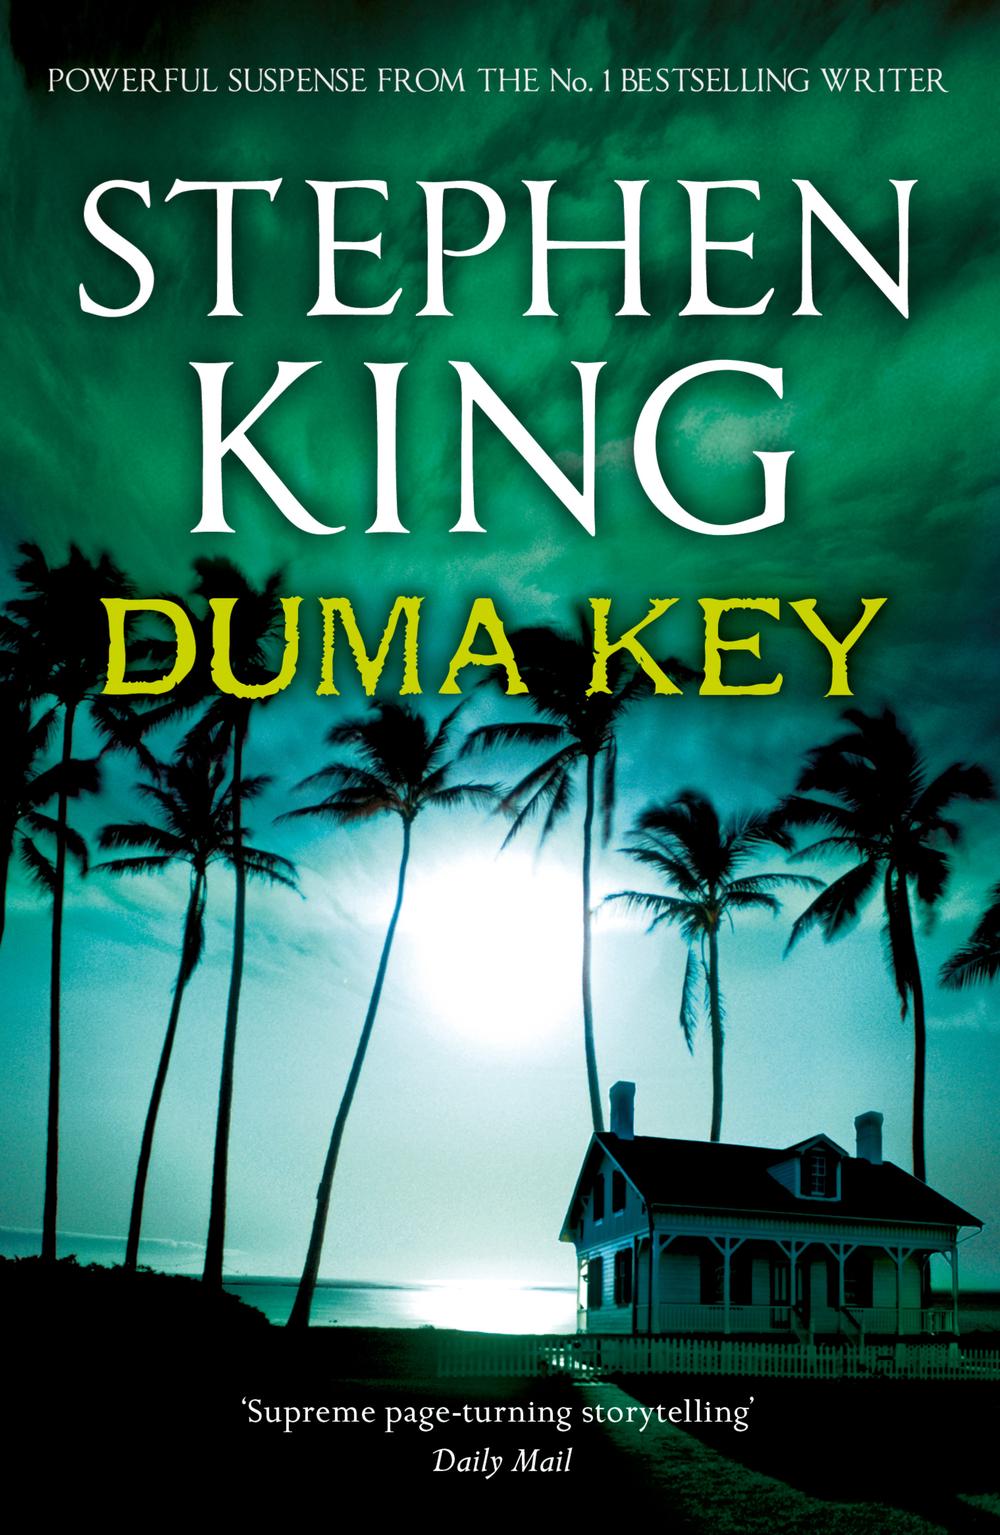 stephen king book duma key